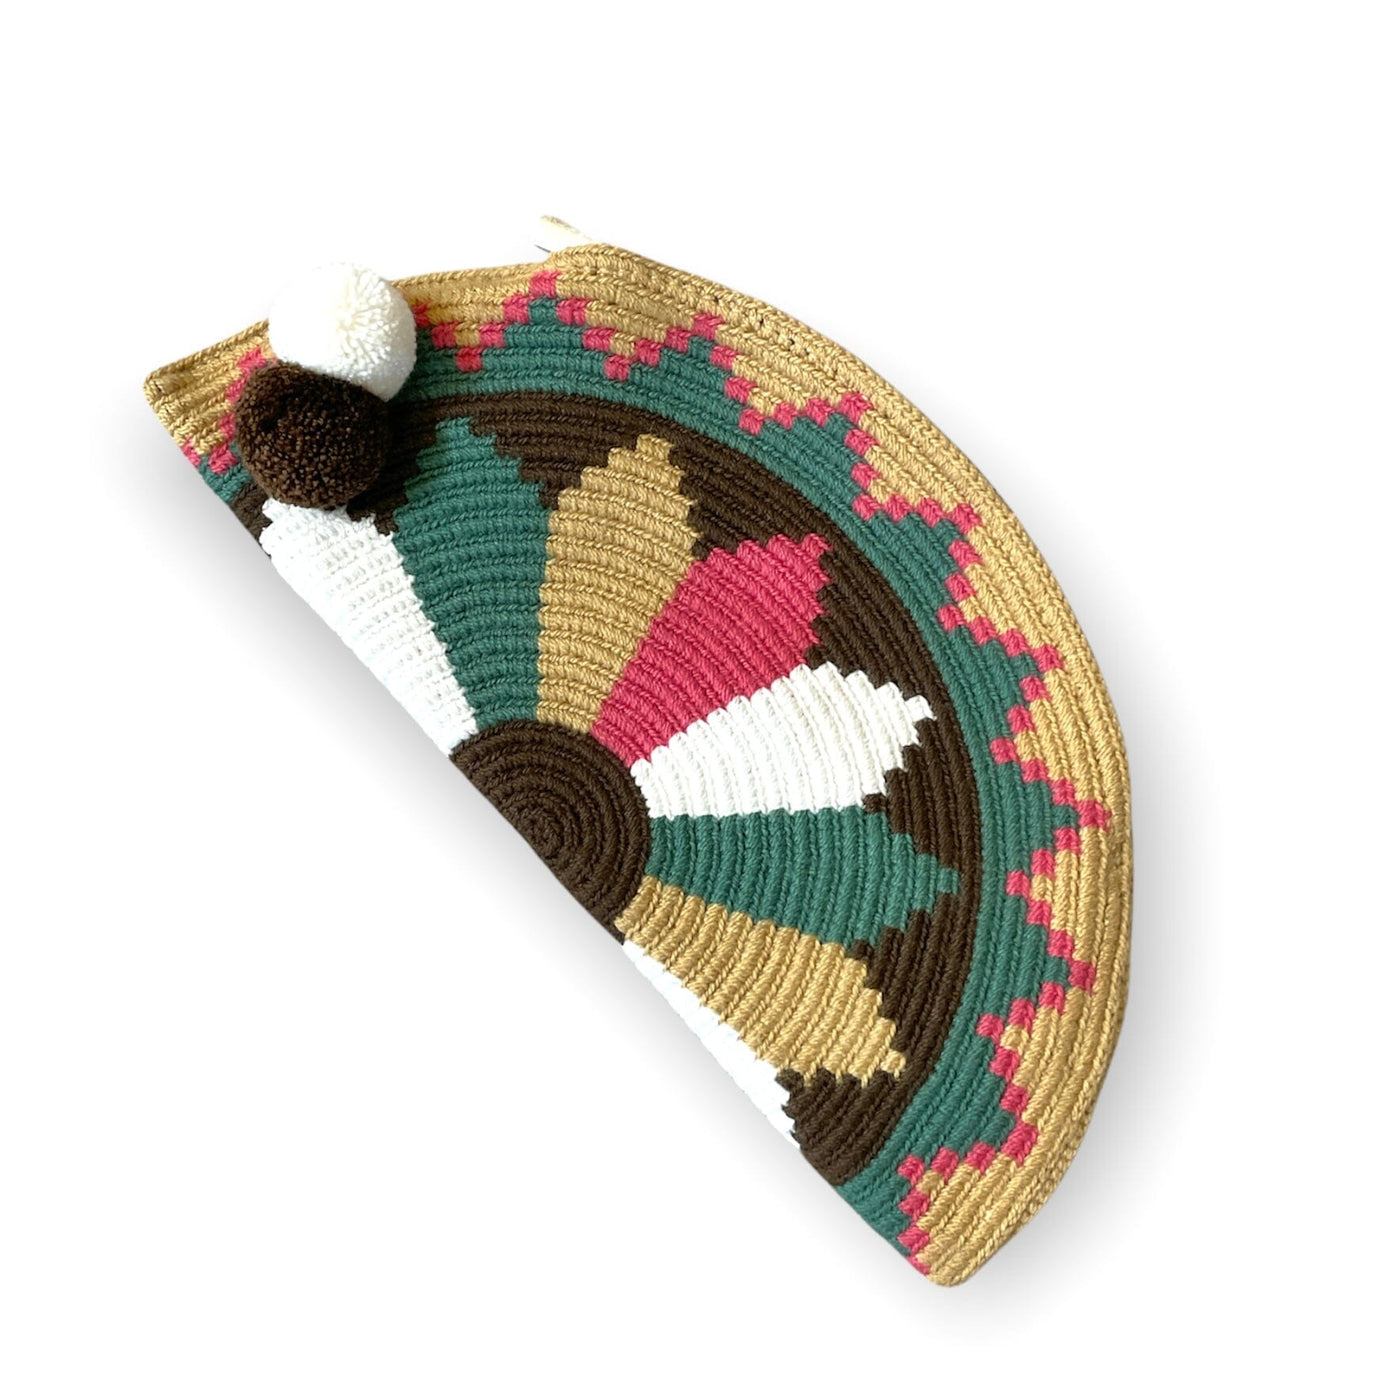 Moon Clutch Purses - Neutral Colors Boho Clutch Bag - Wayuu Crochet Envelope Desert Dreams DD03 